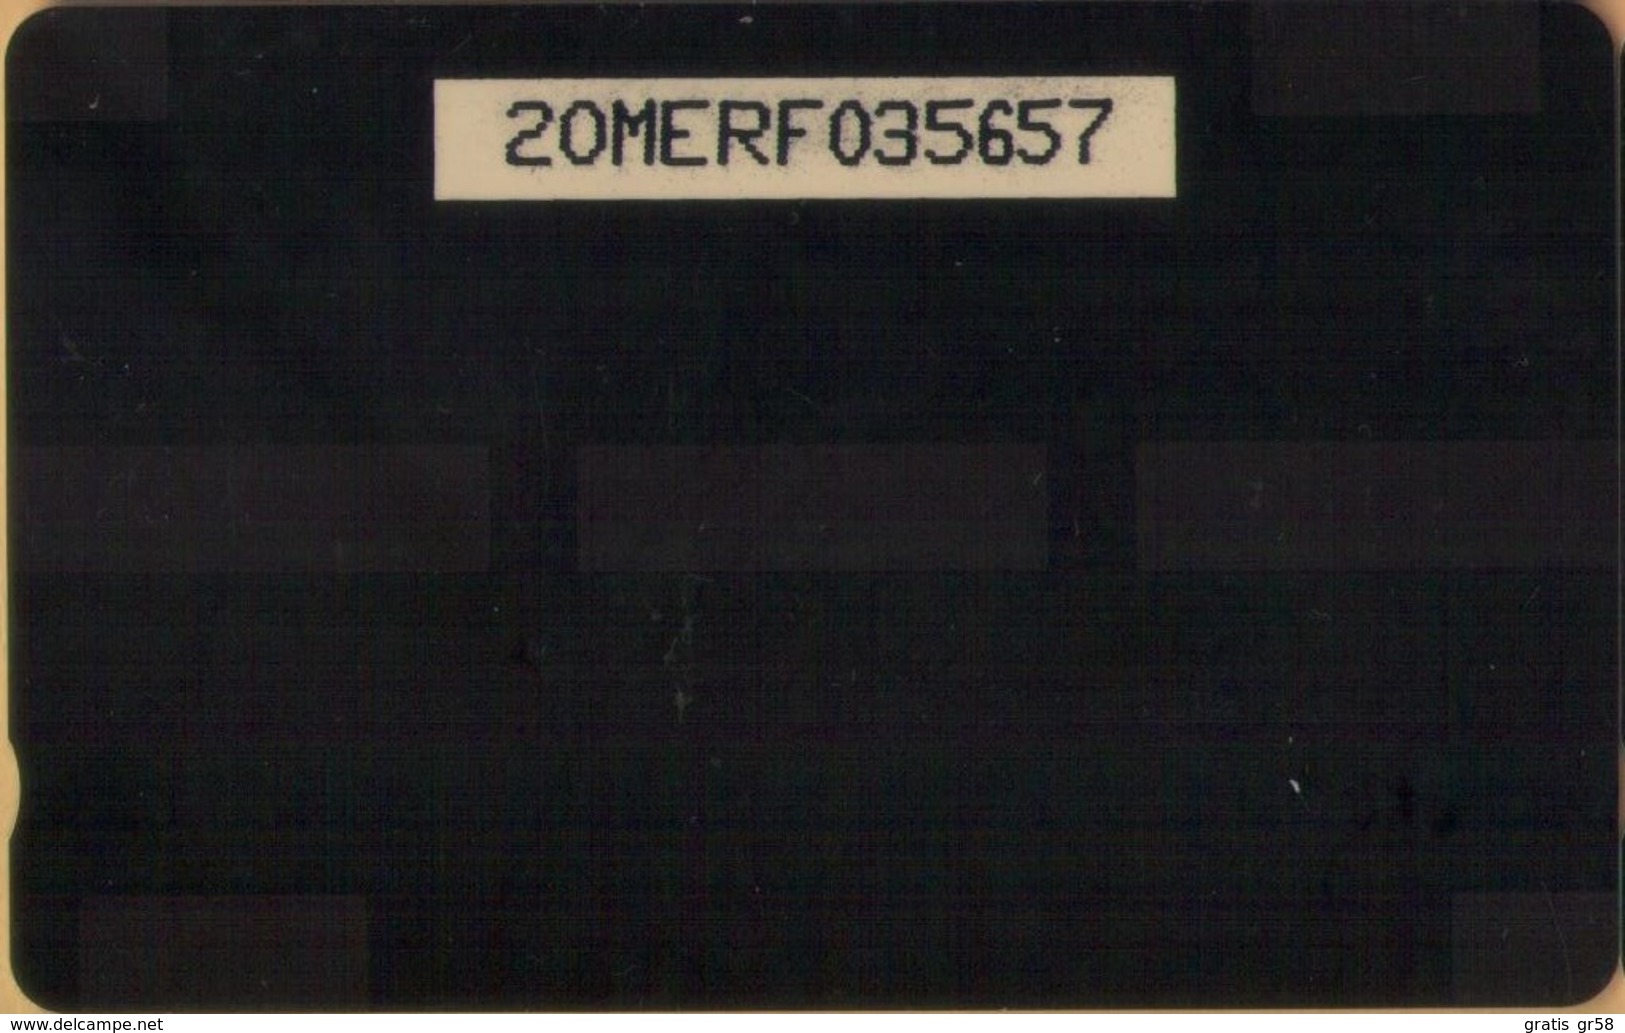 Mercury - GPT Cards, MER109, Scandic Hotel (071 834 8123), 20MERF, 5£, 5,728ex, Mint - [ 4] Mercury Communications & Paytelco